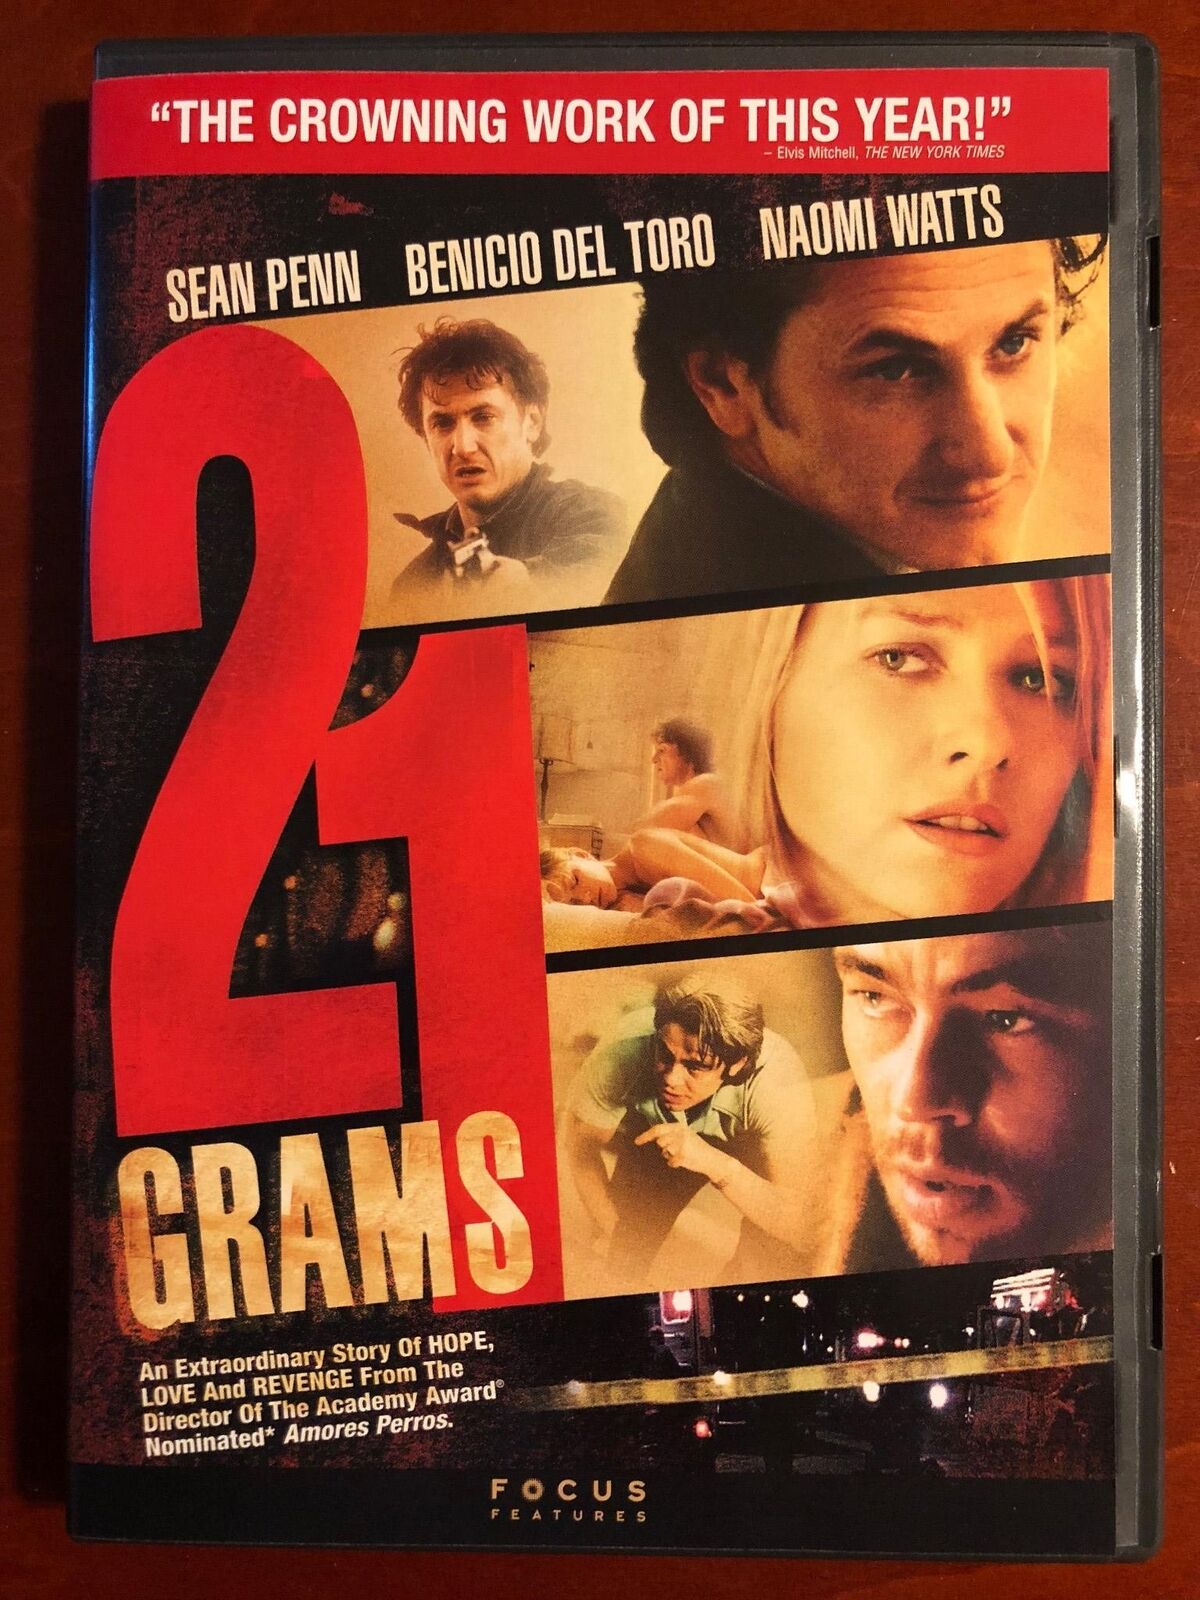 21 Grams (DVD, 2003) - J0129